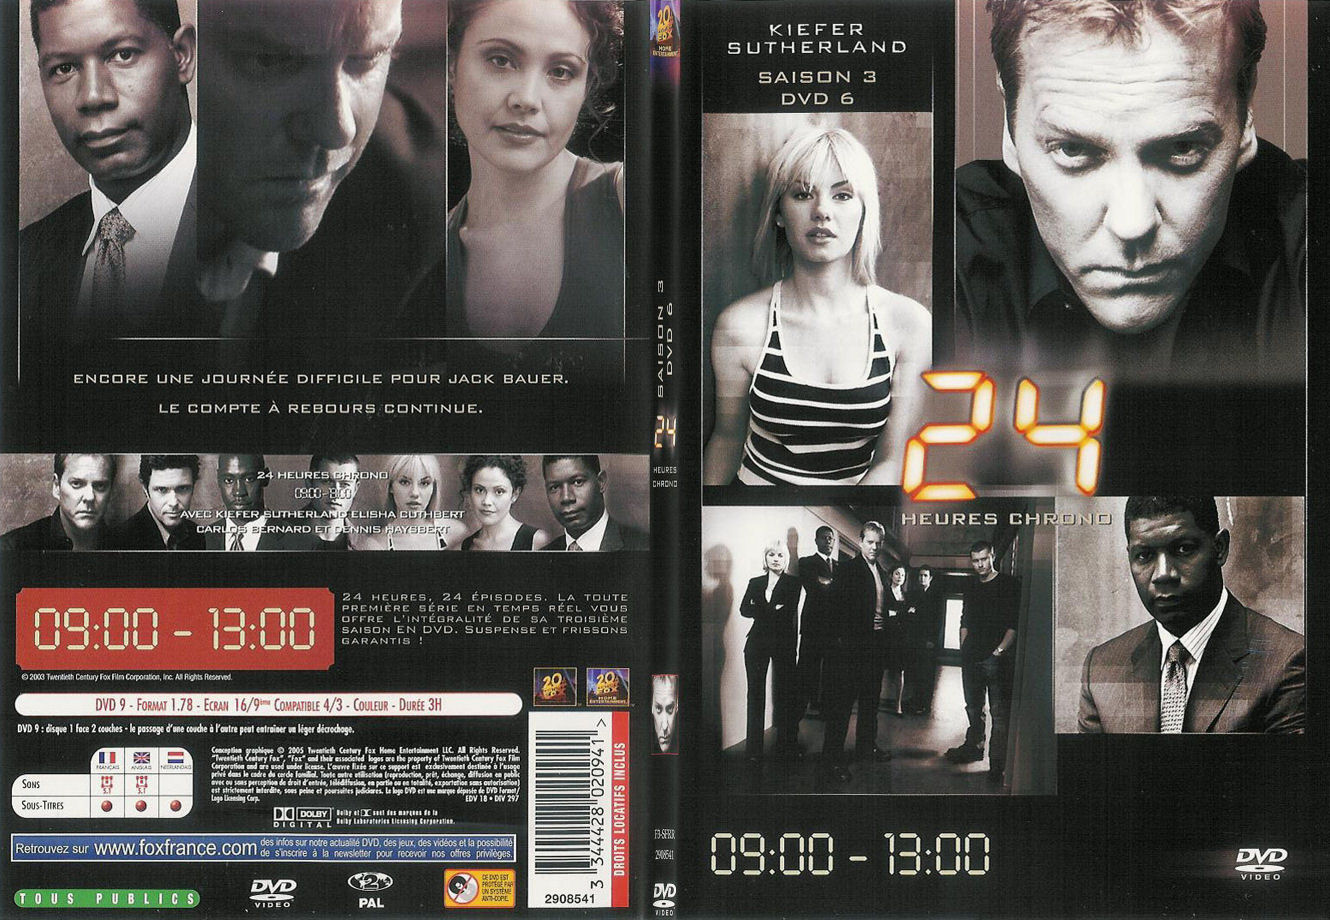 Jaquette DVD 24 heures chrono Saison 3 dvd 6 - SLIM